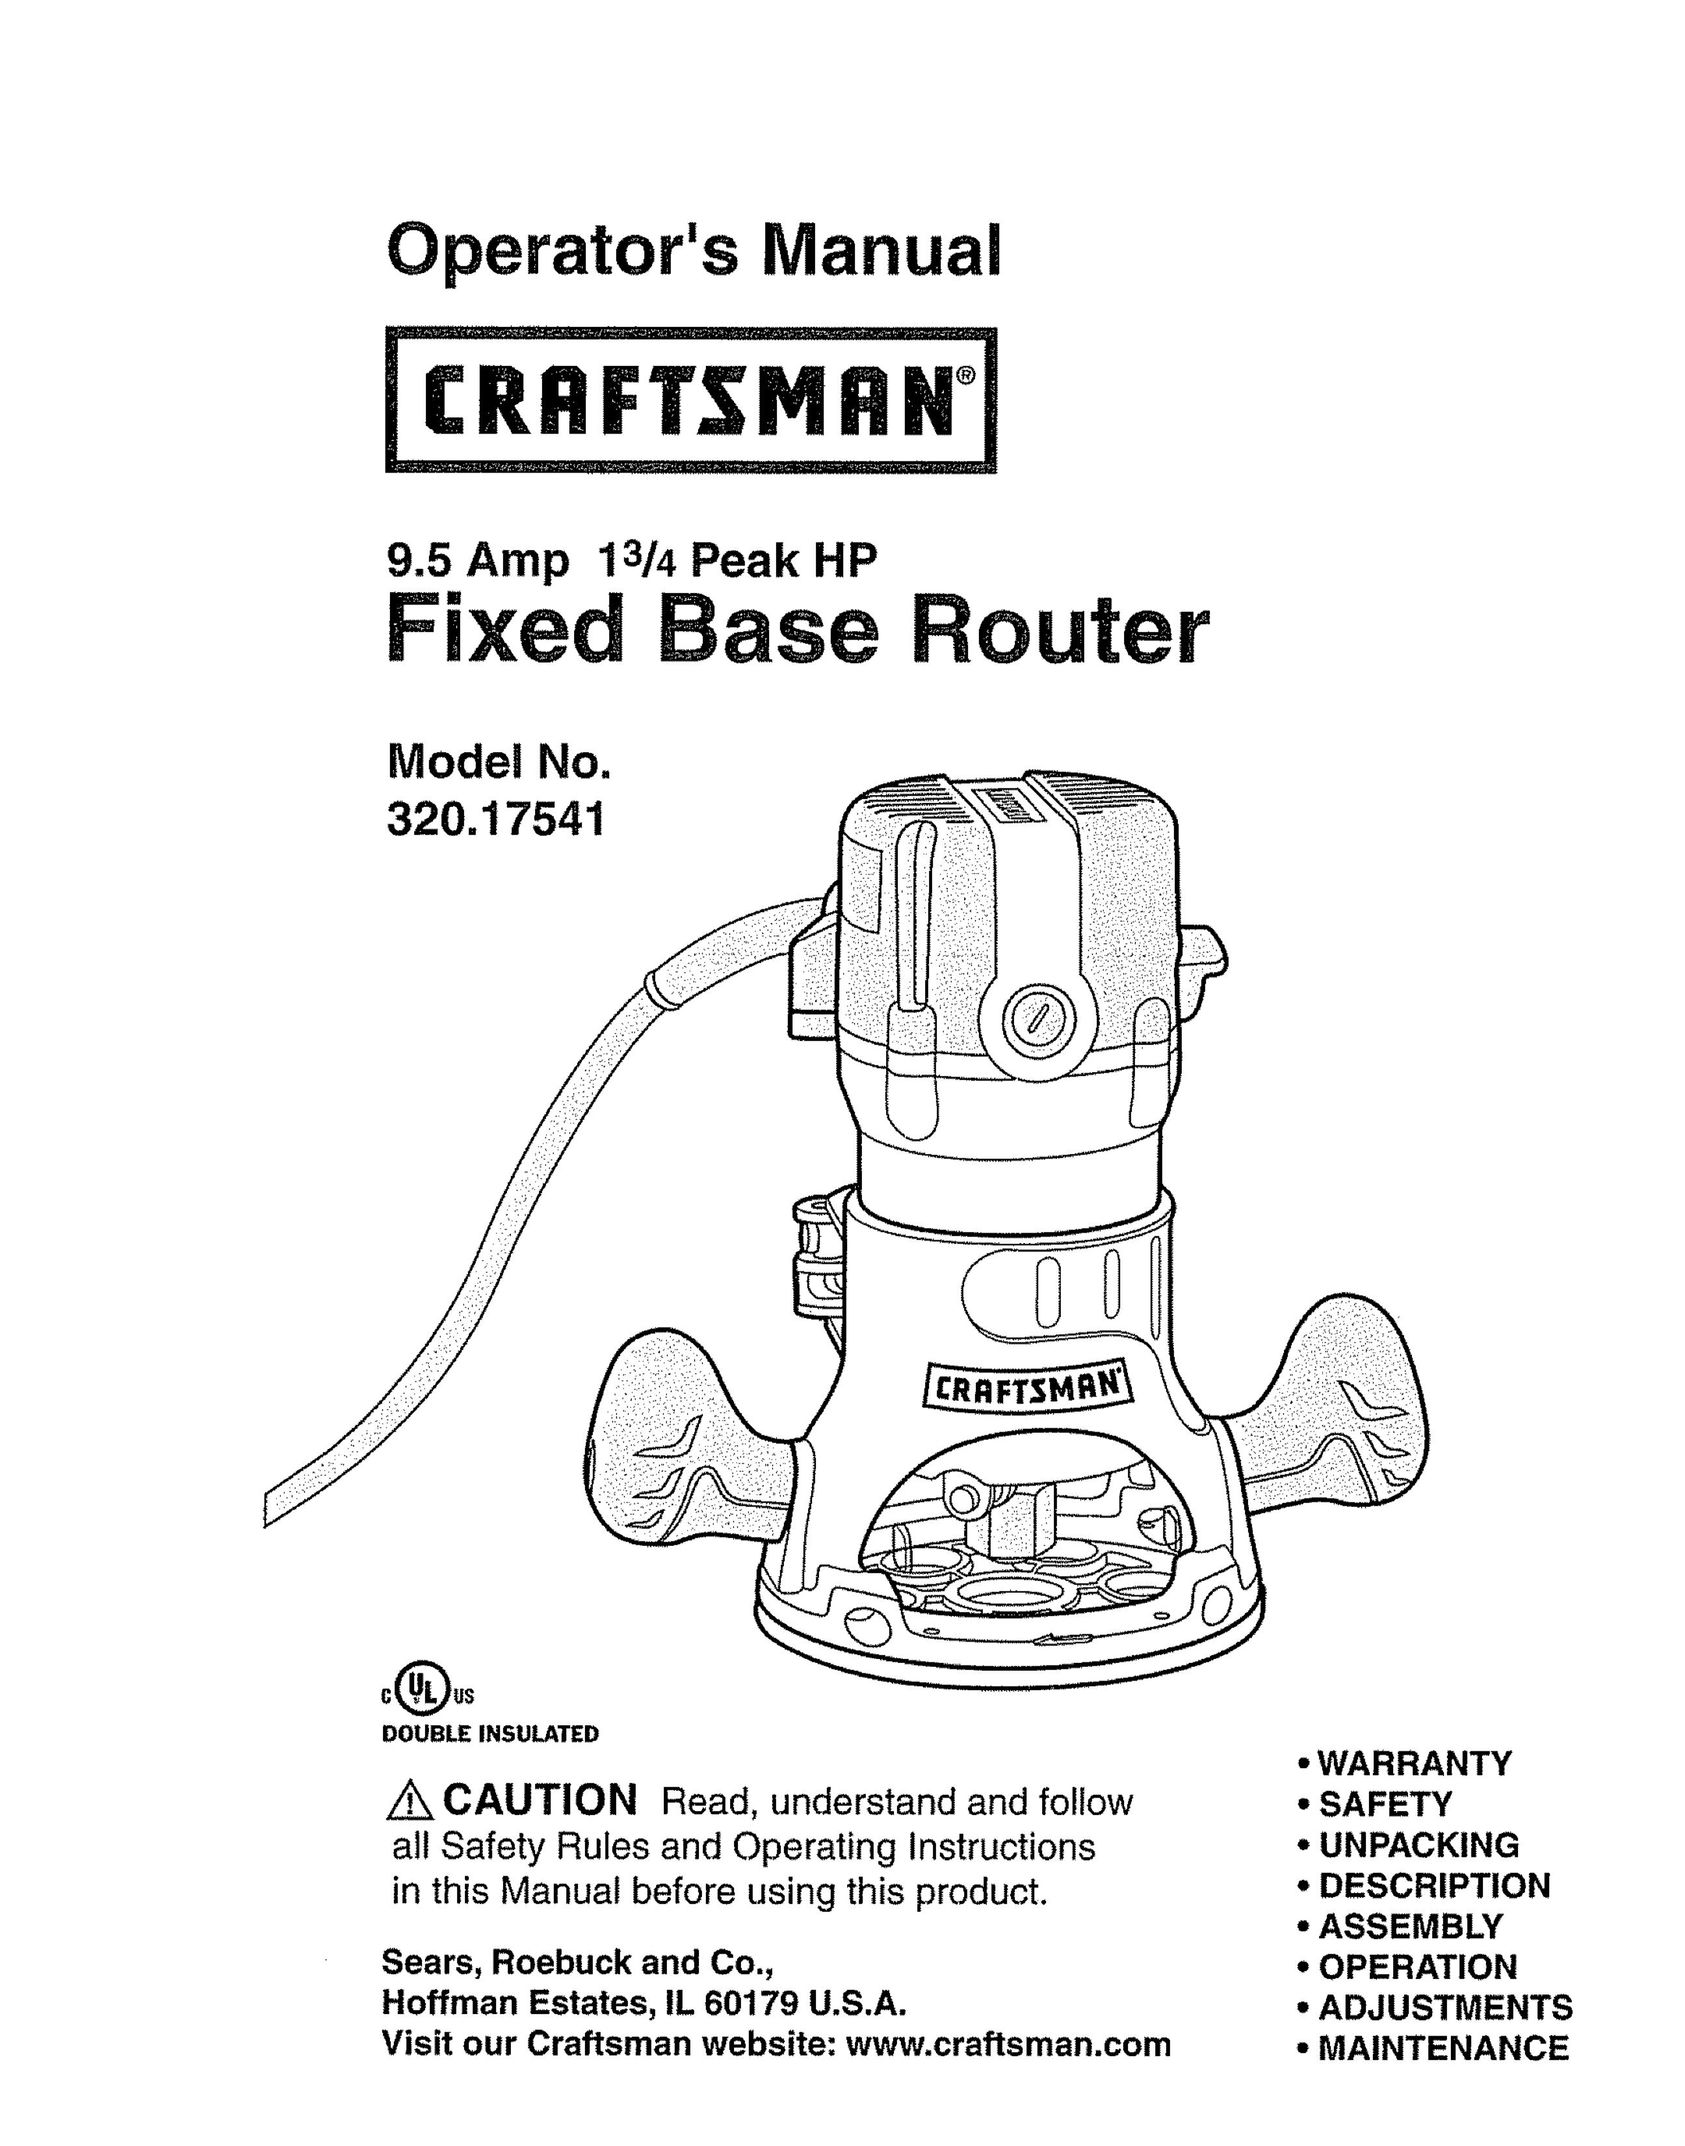 Craftsman 320.17541 Router User Manual